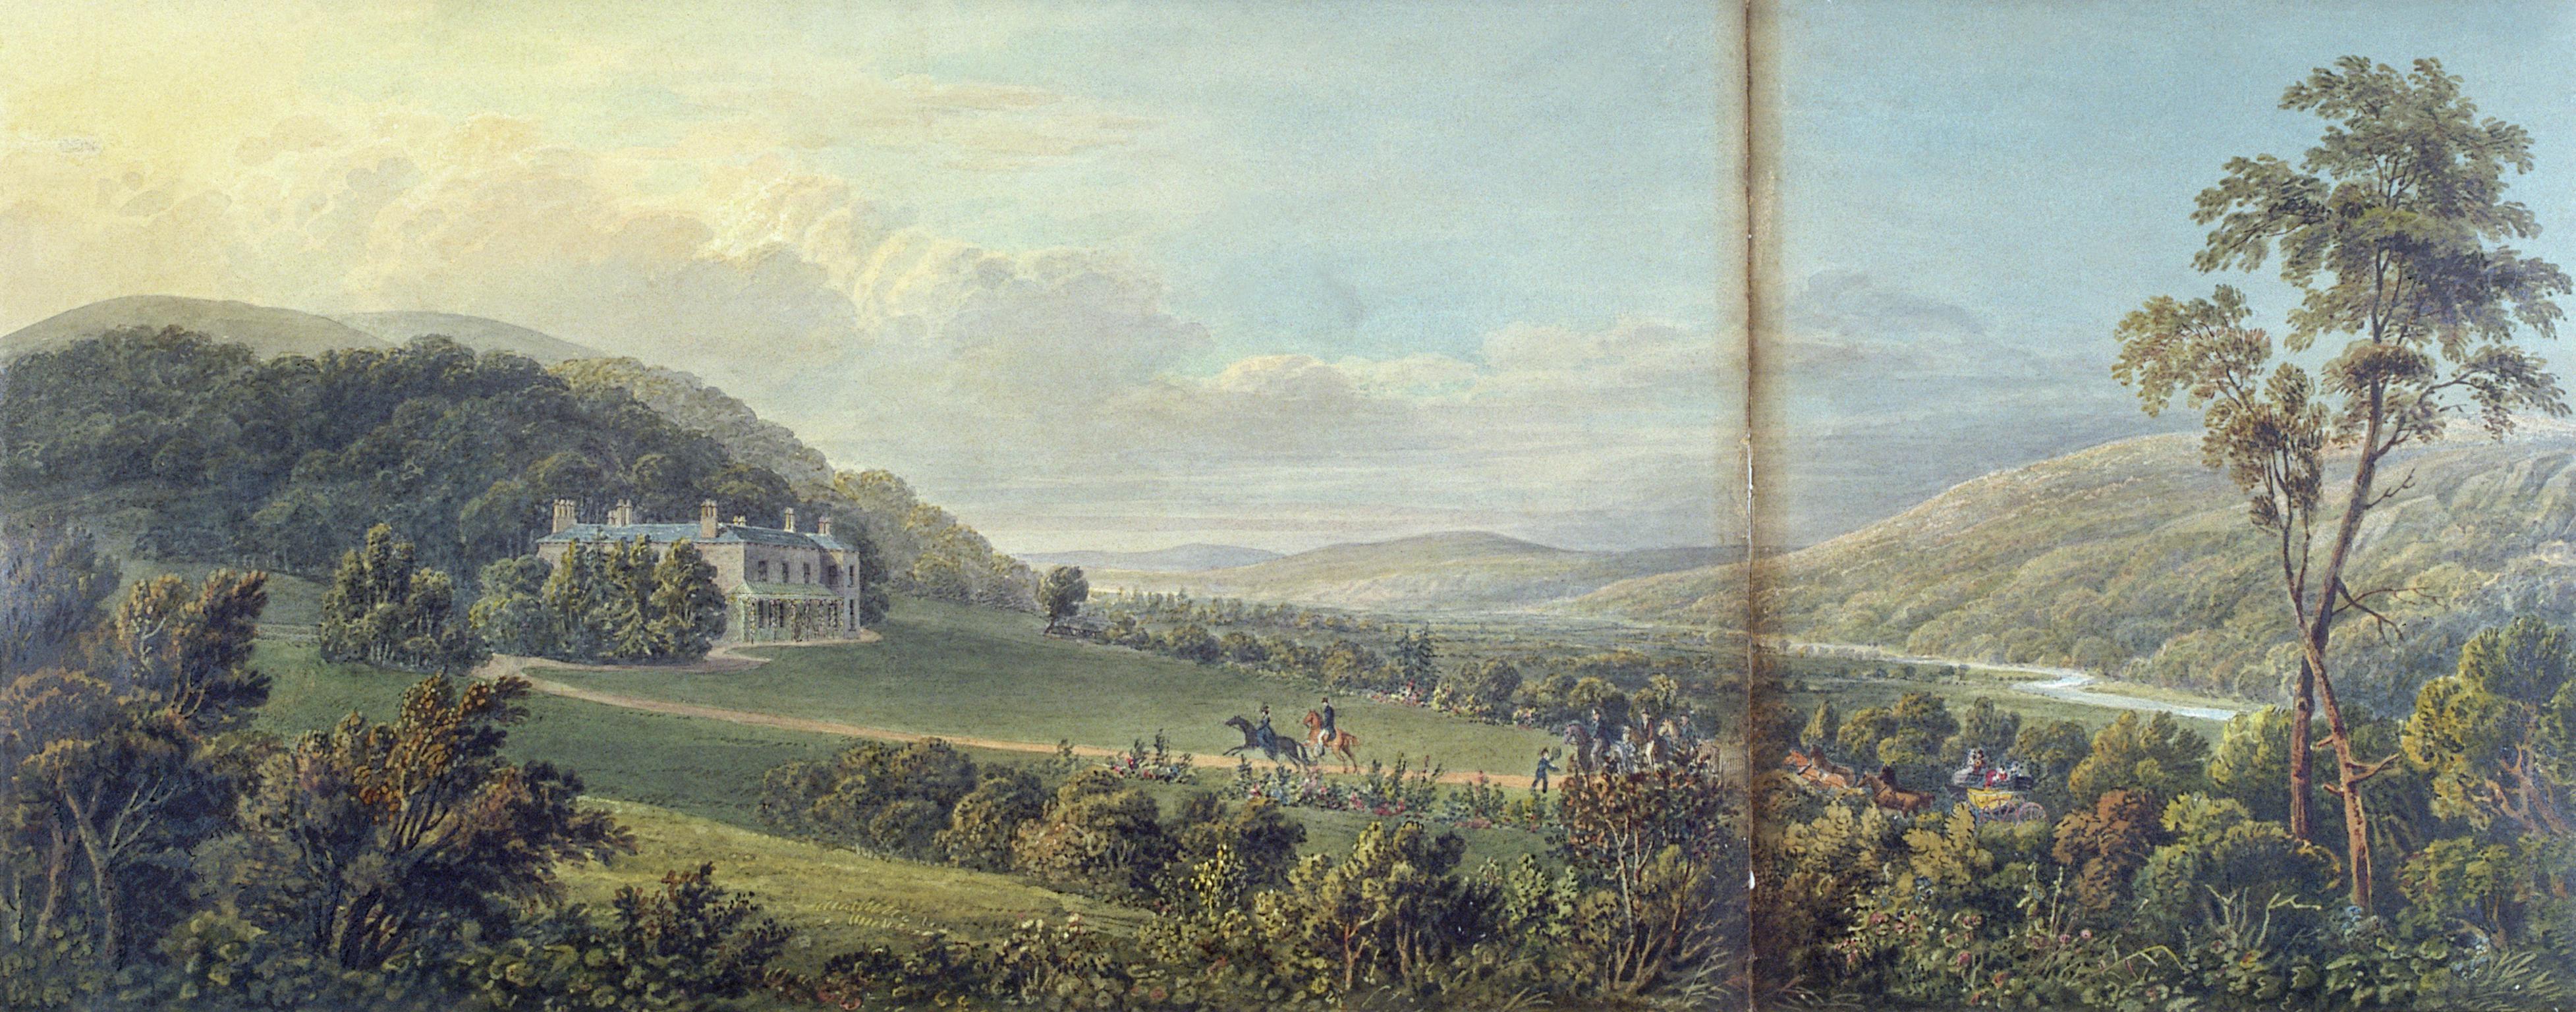 Panorama of Rheola